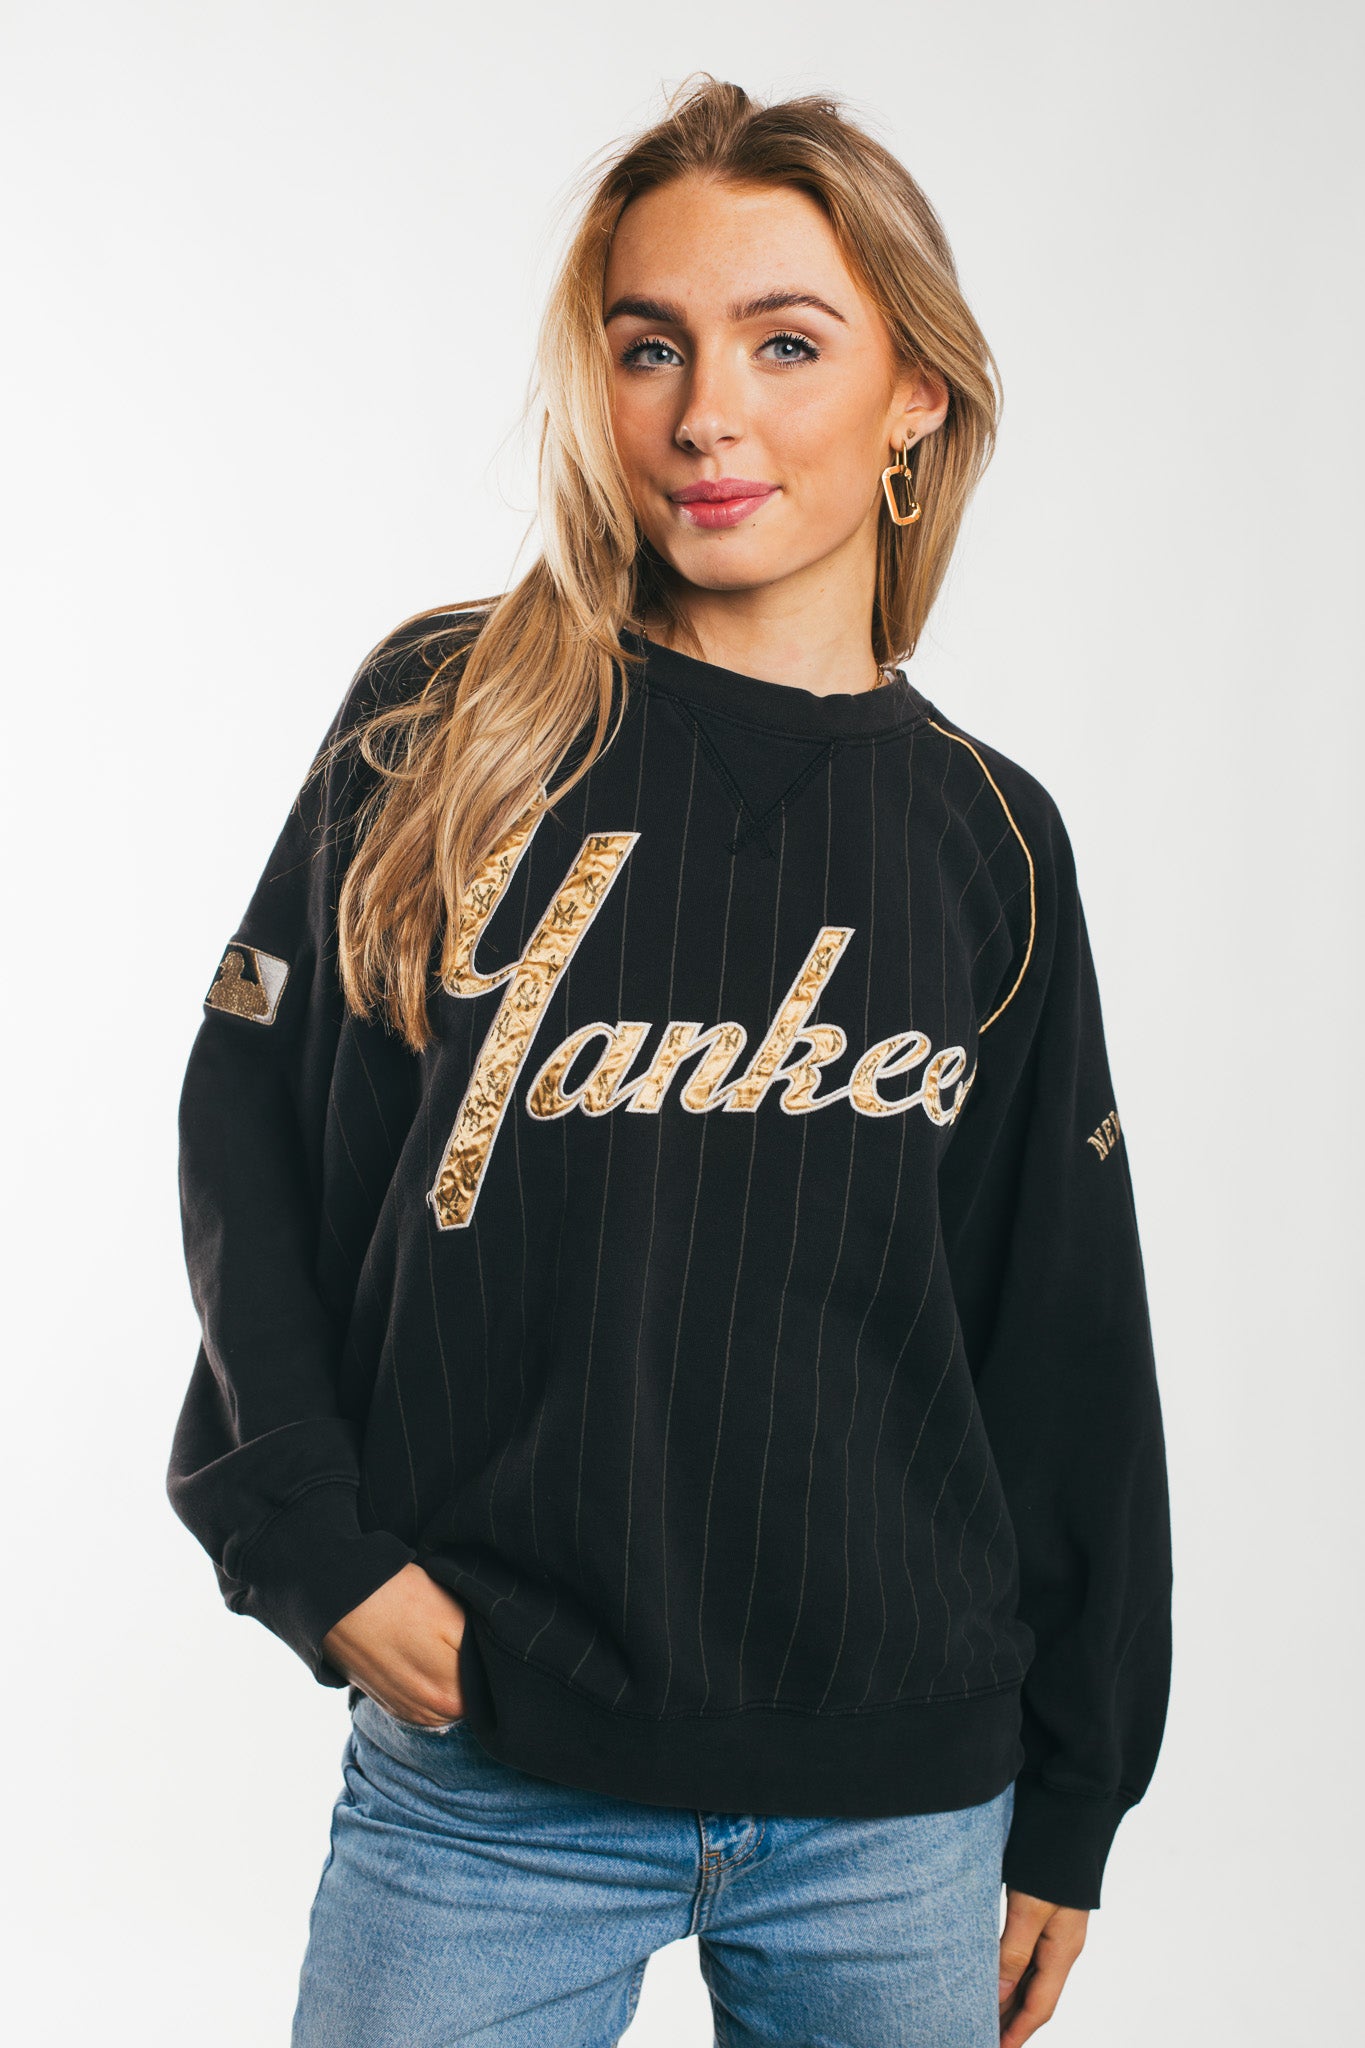 Yankees - Sweatshirt (L)